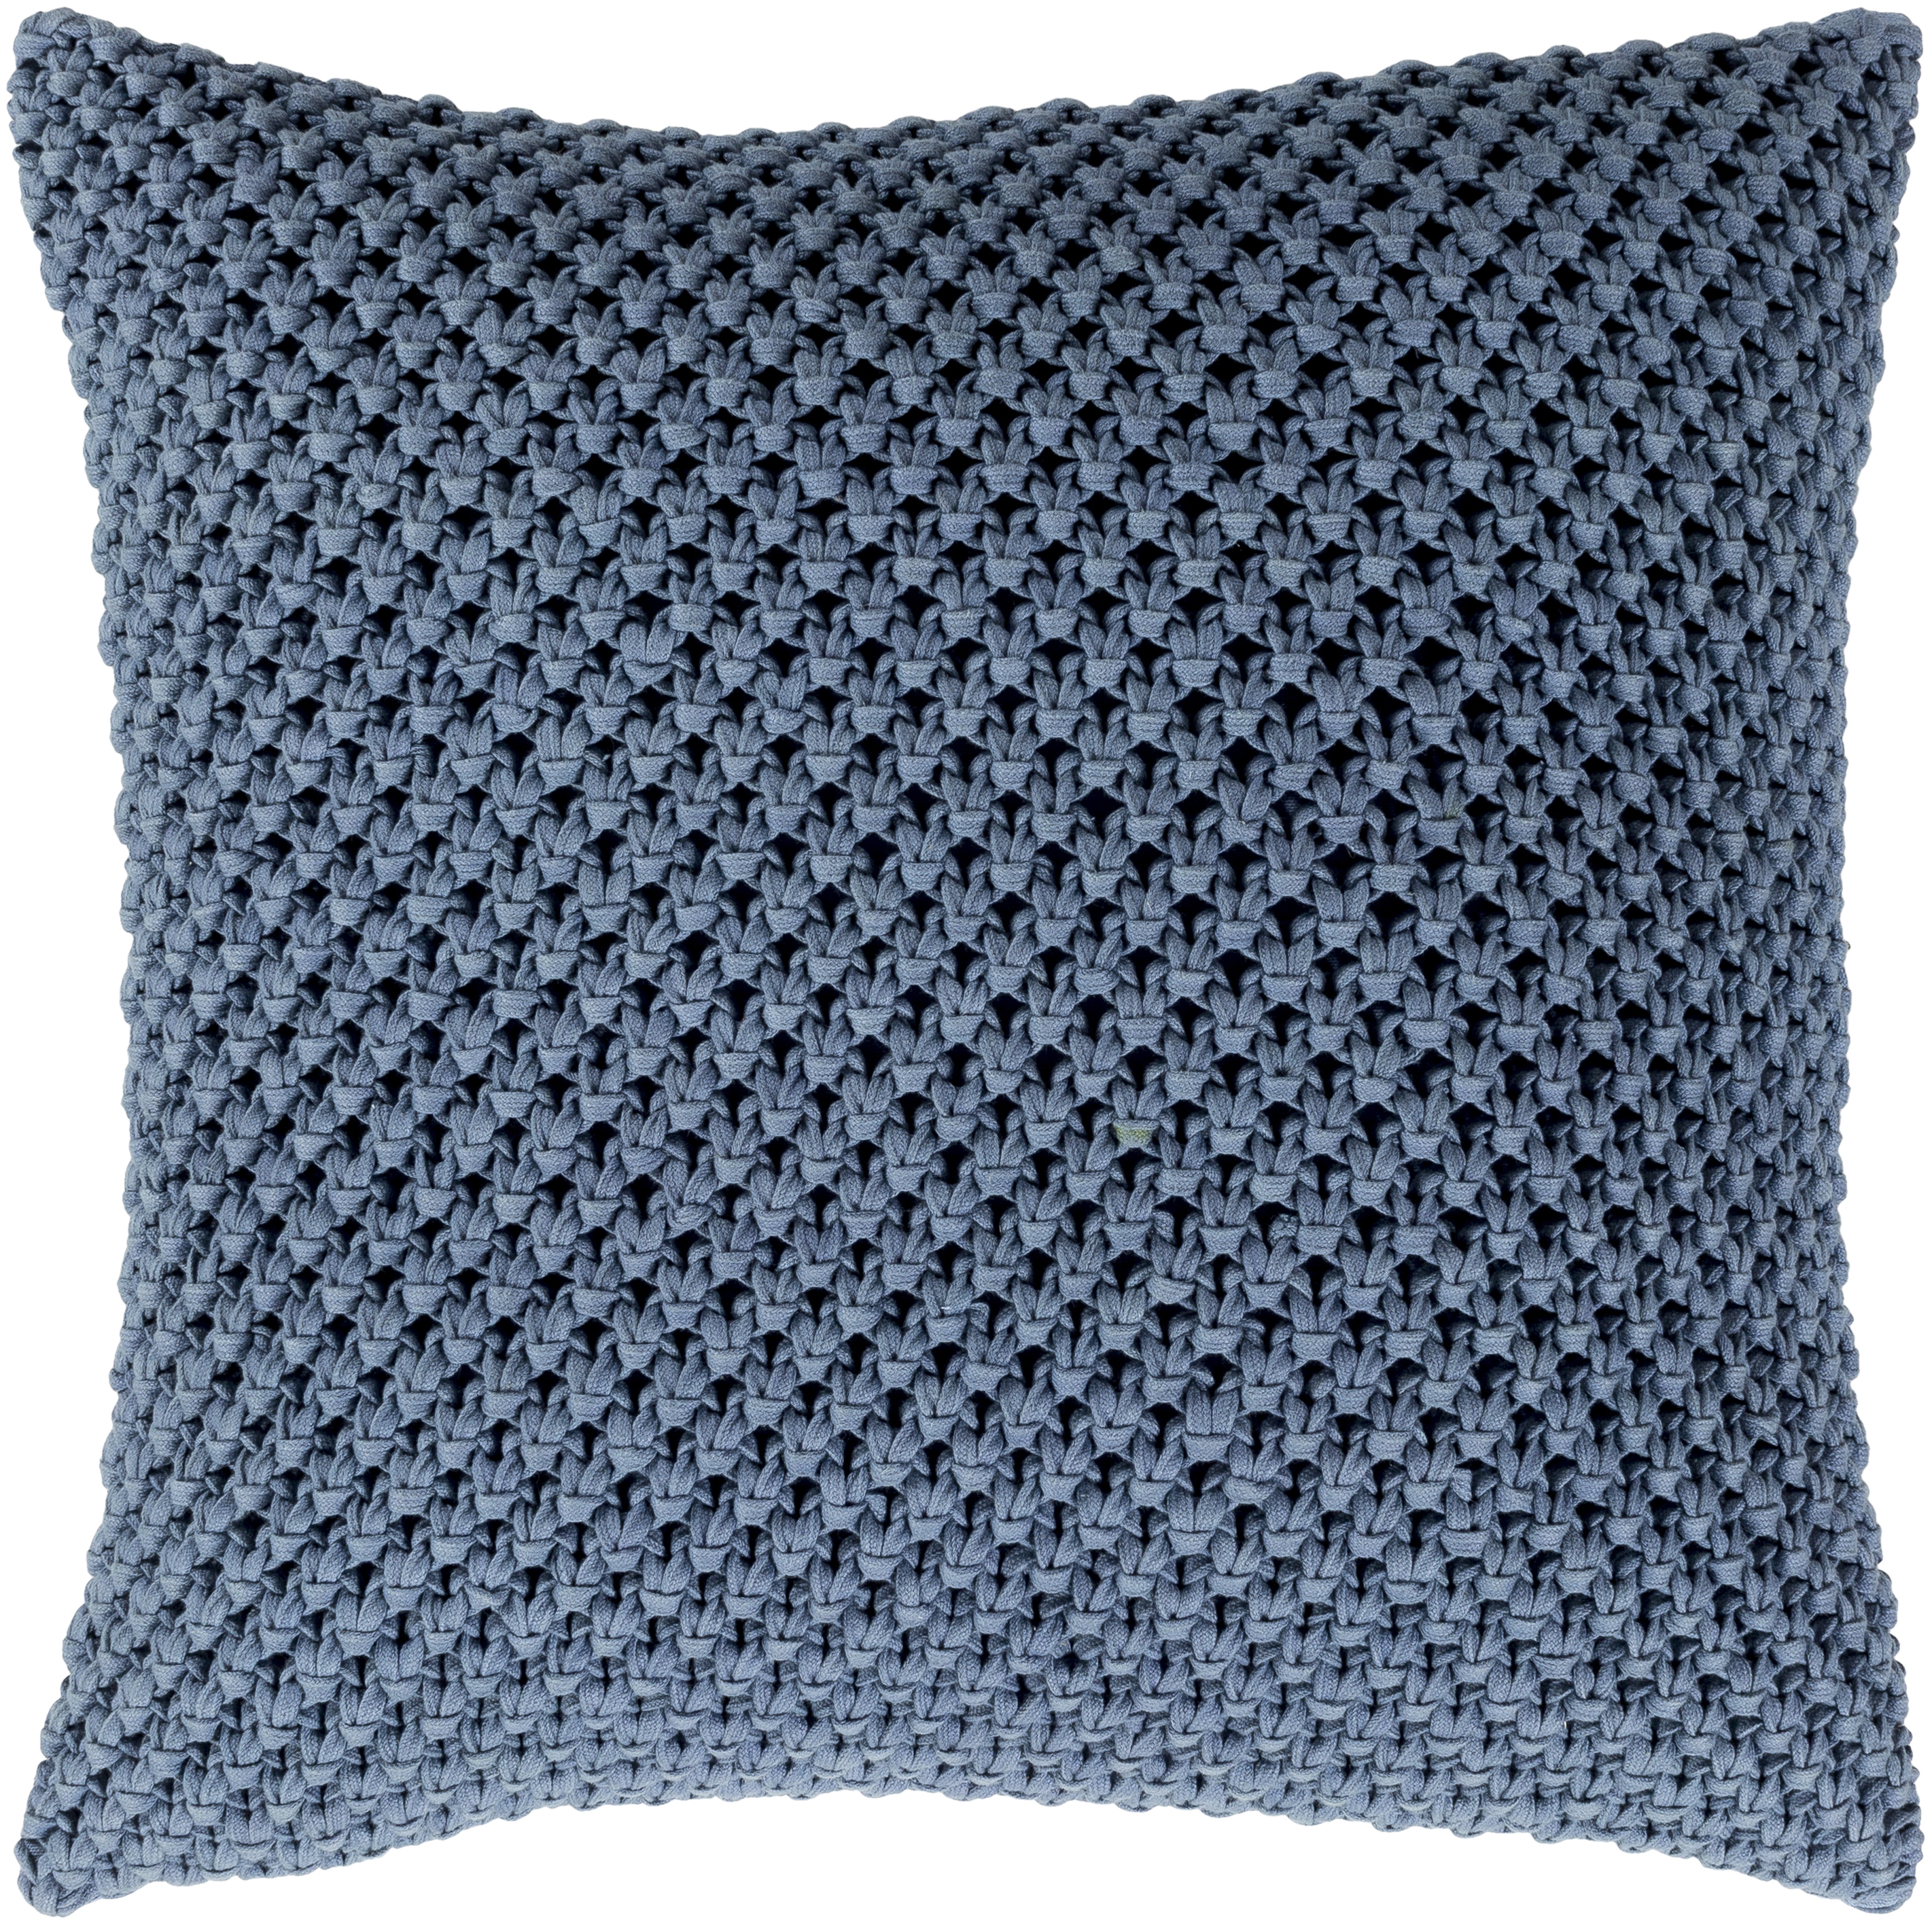 Godavari Throw Pillow, 20" x 20", with down insert - Image 0